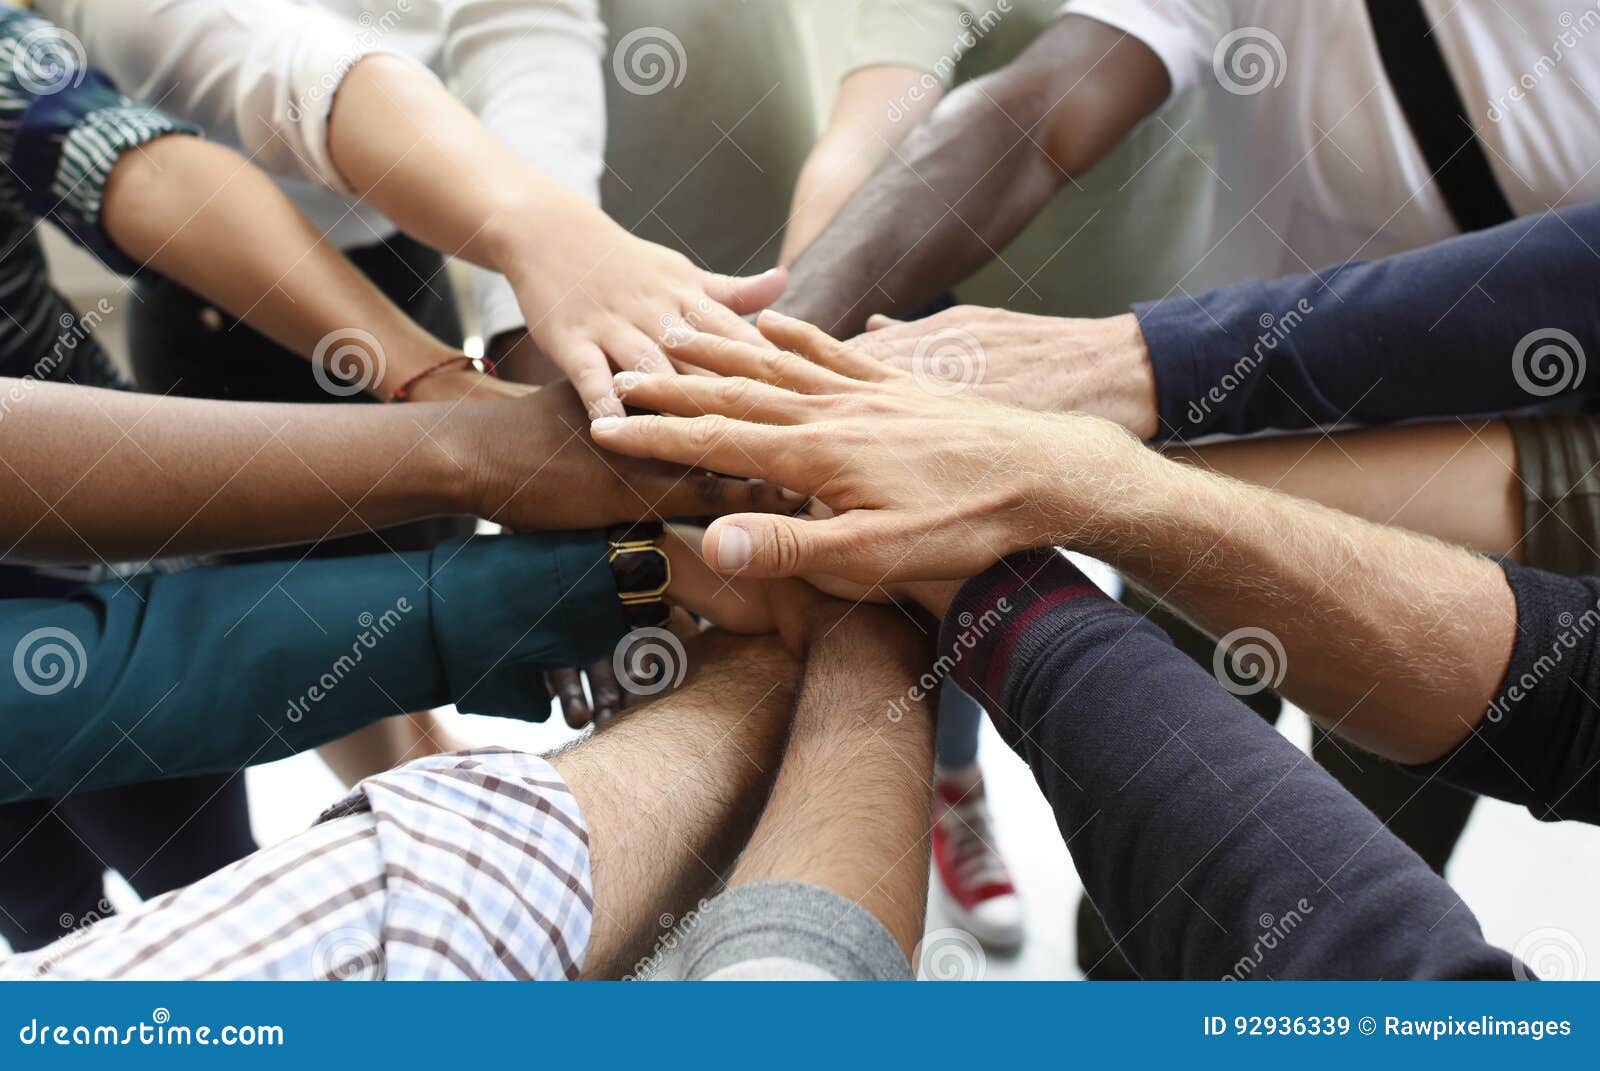 startup business people teamwork cooperation hands together